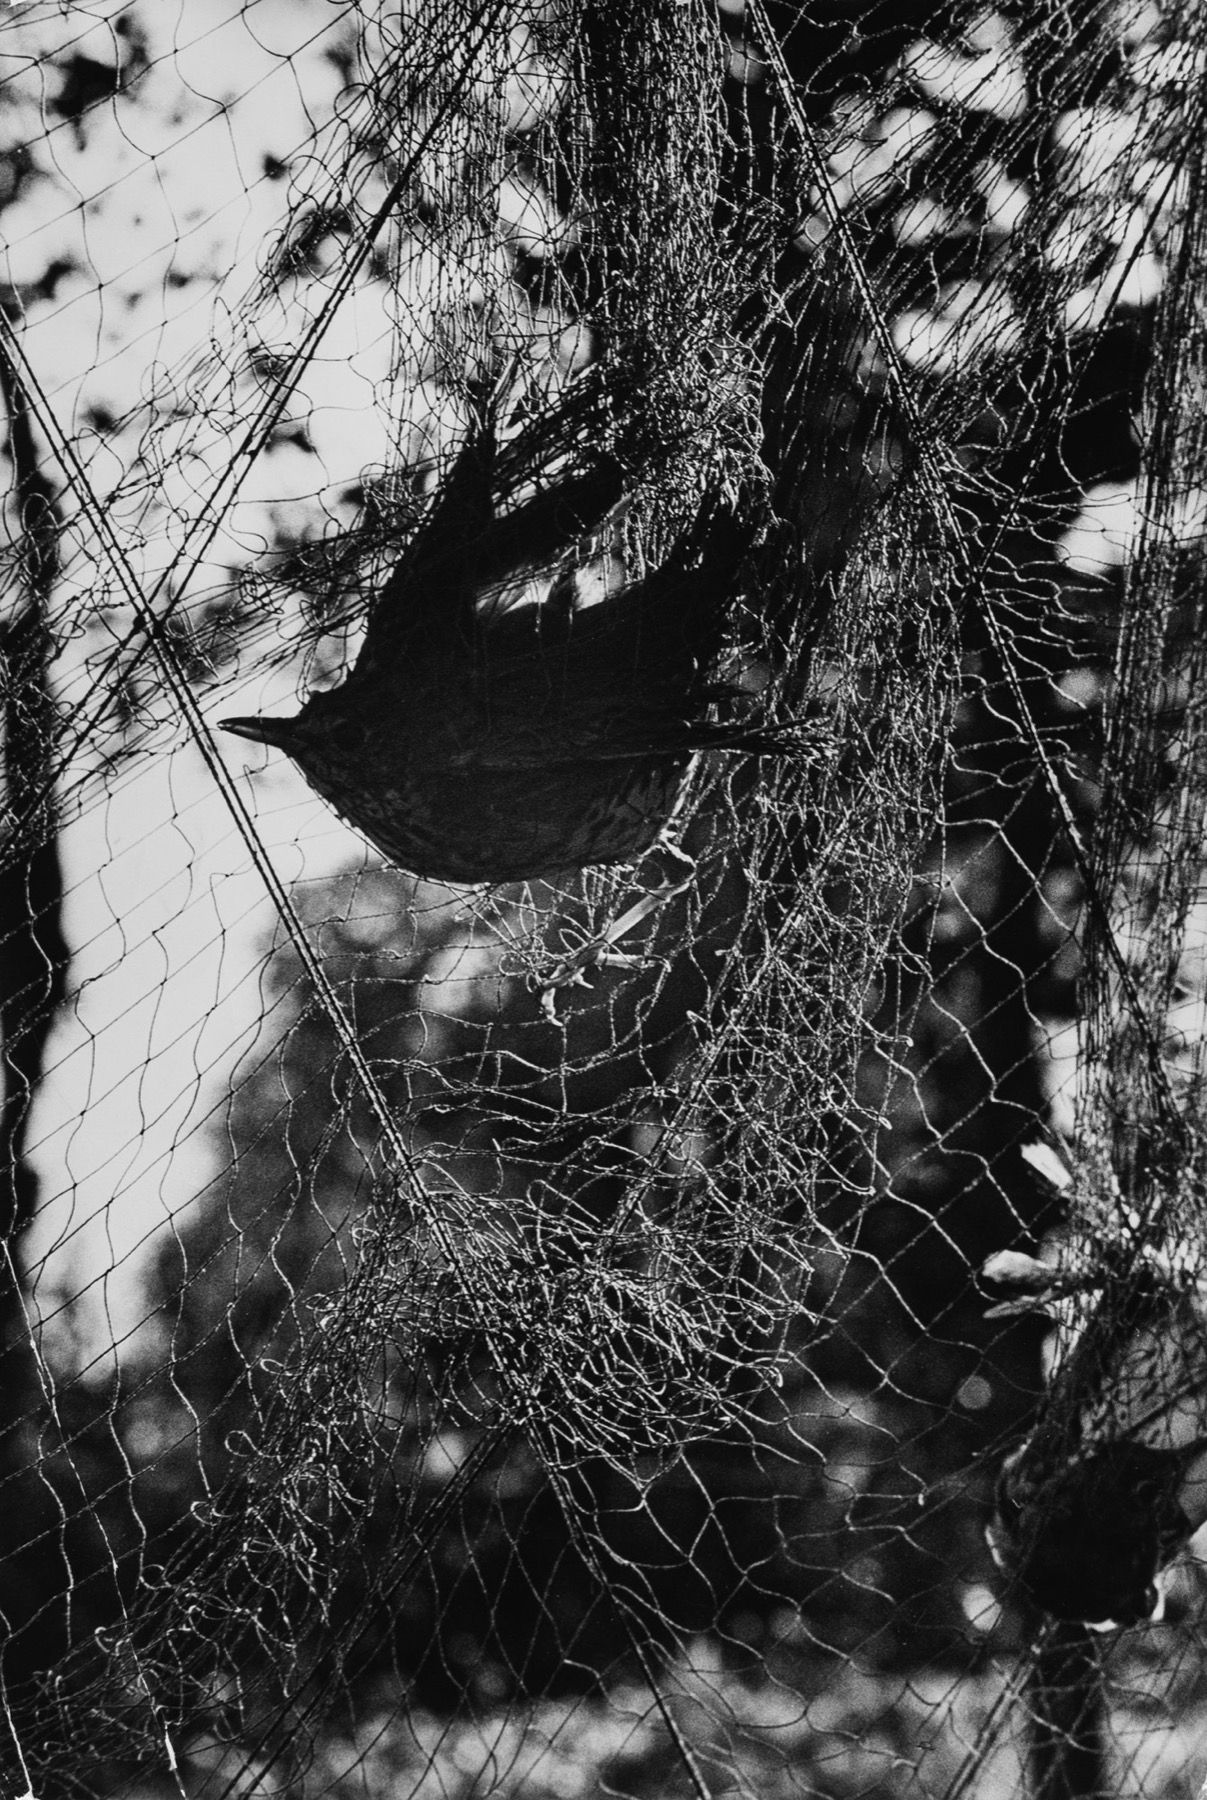 Giuseppe (Pepi) Merisio 网中的鸫鸟，1969年

复古明胶银印刷品
11.8 x 8 in.
背面有摄影师的信用印章和教学标签